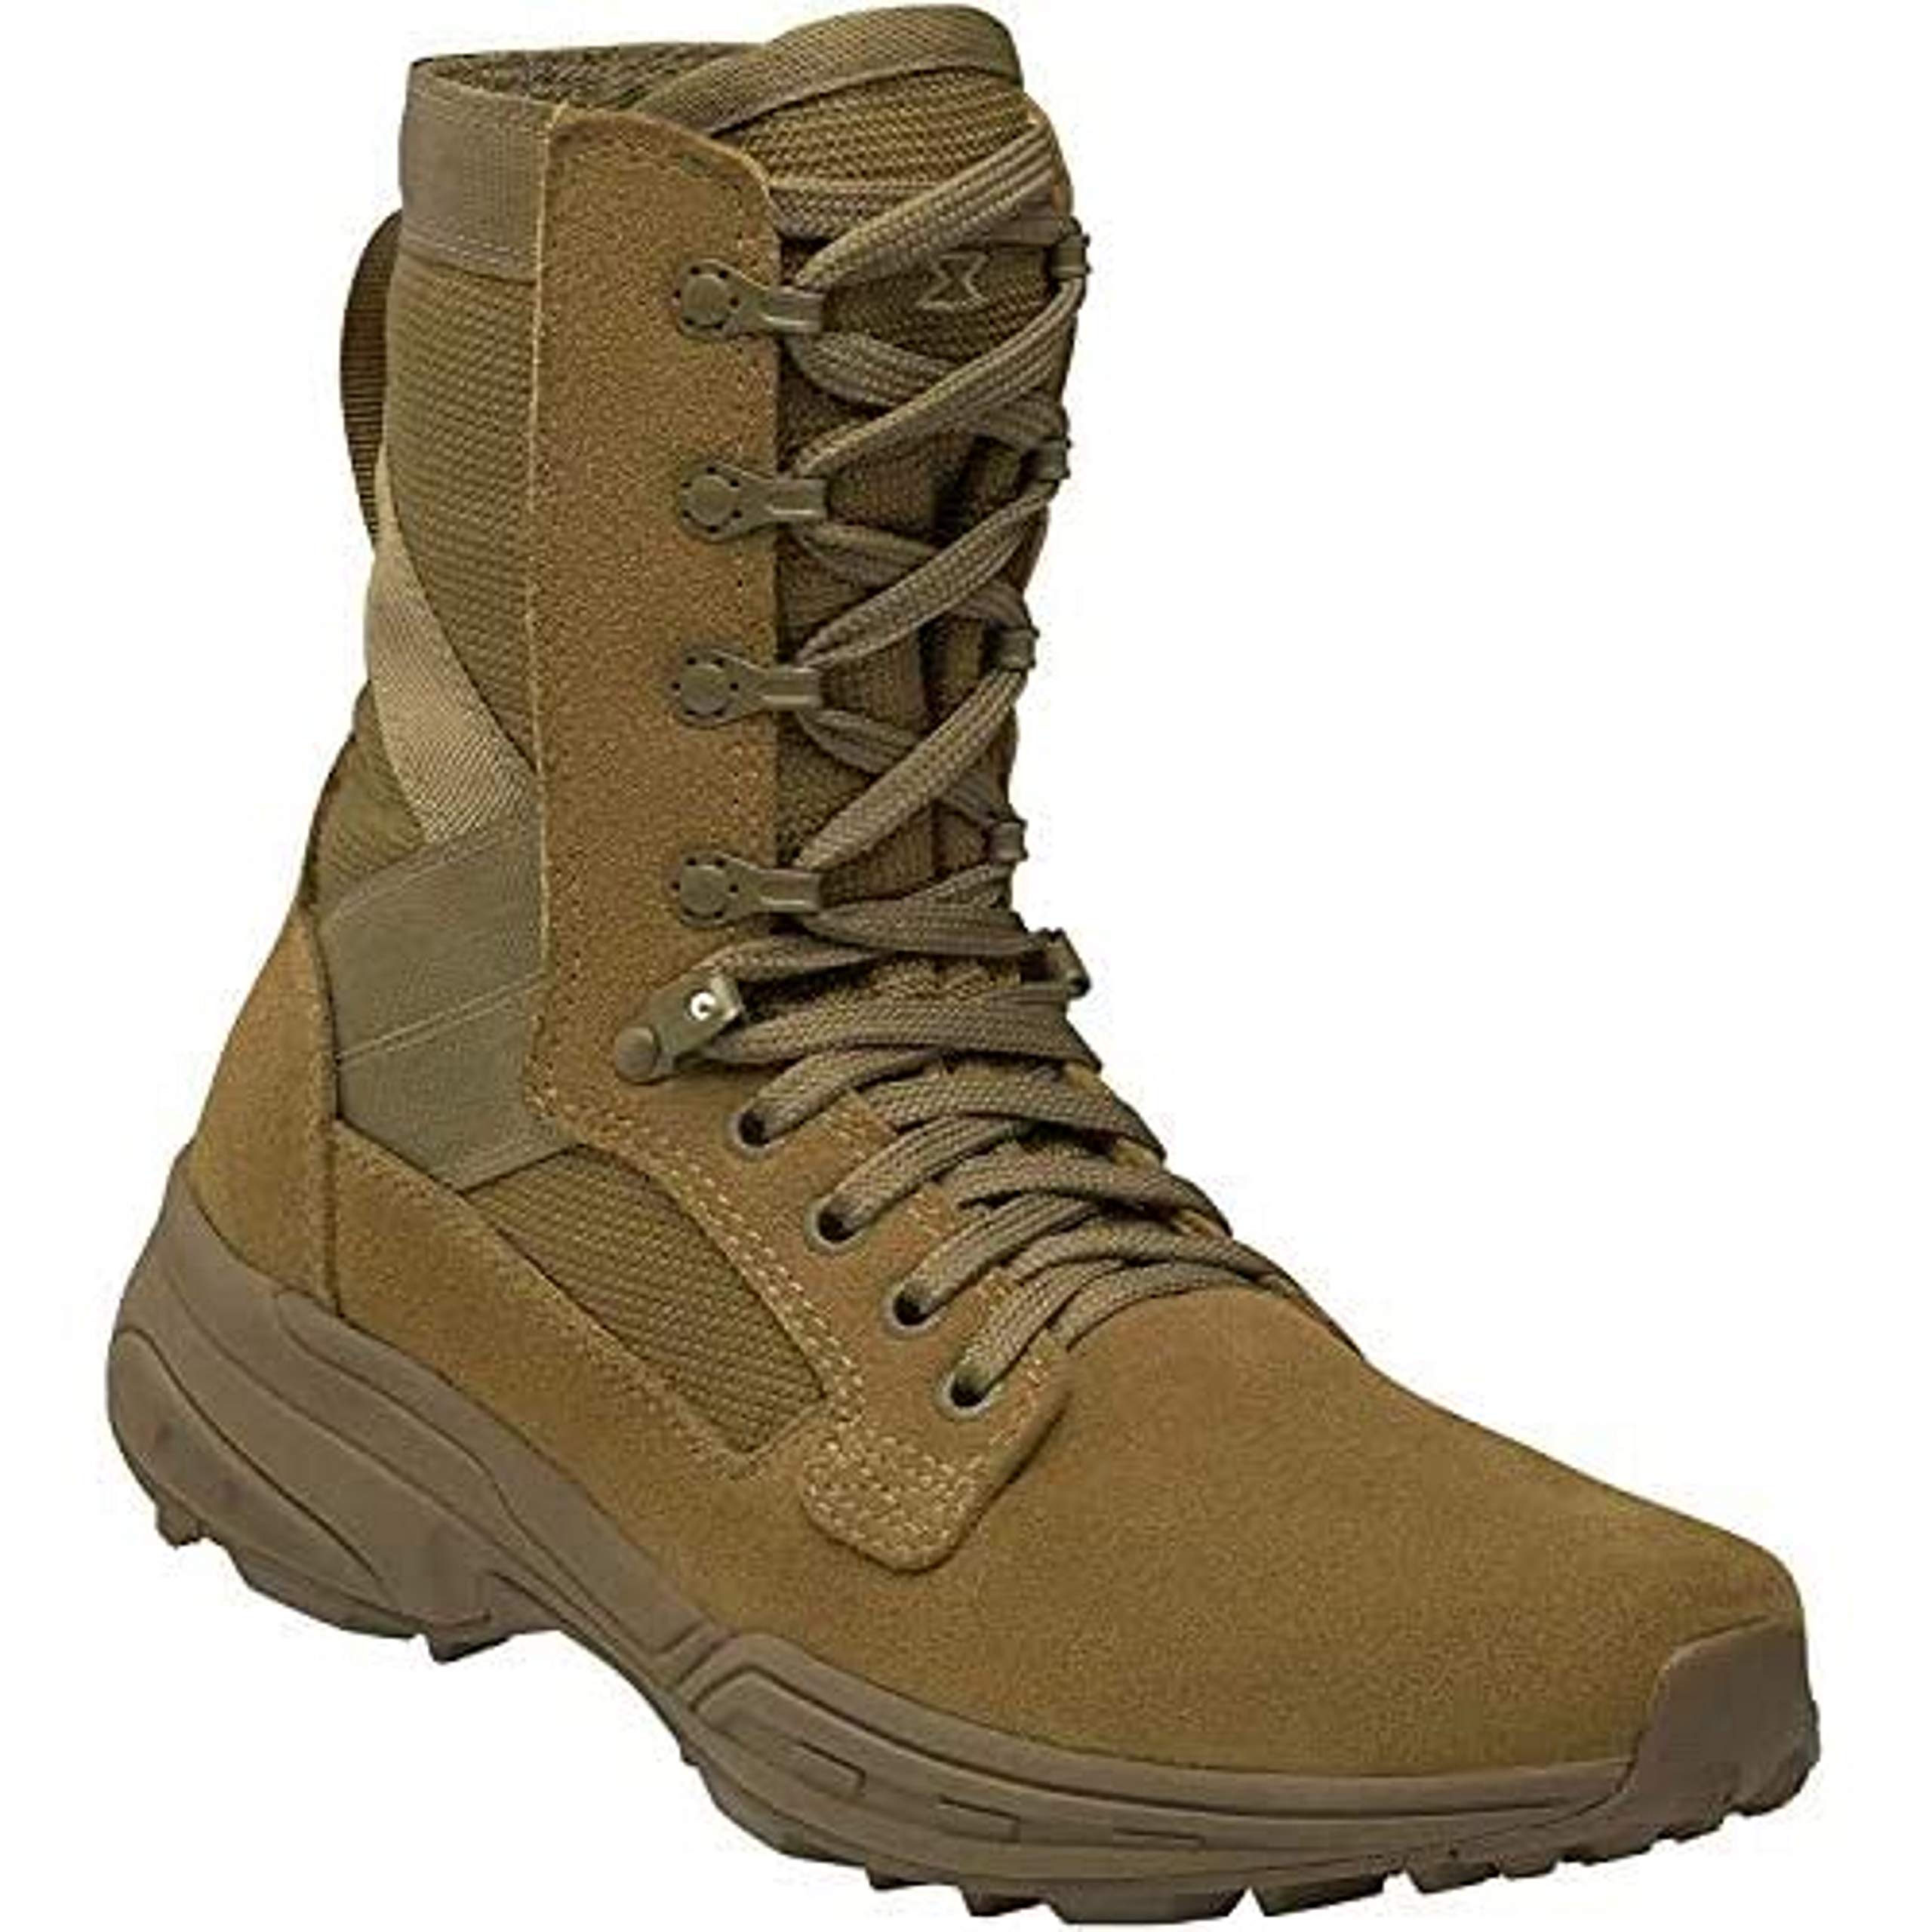 Garmont Mens Boots - Tactical 8 NFS 670 Regular - Coyote - 12